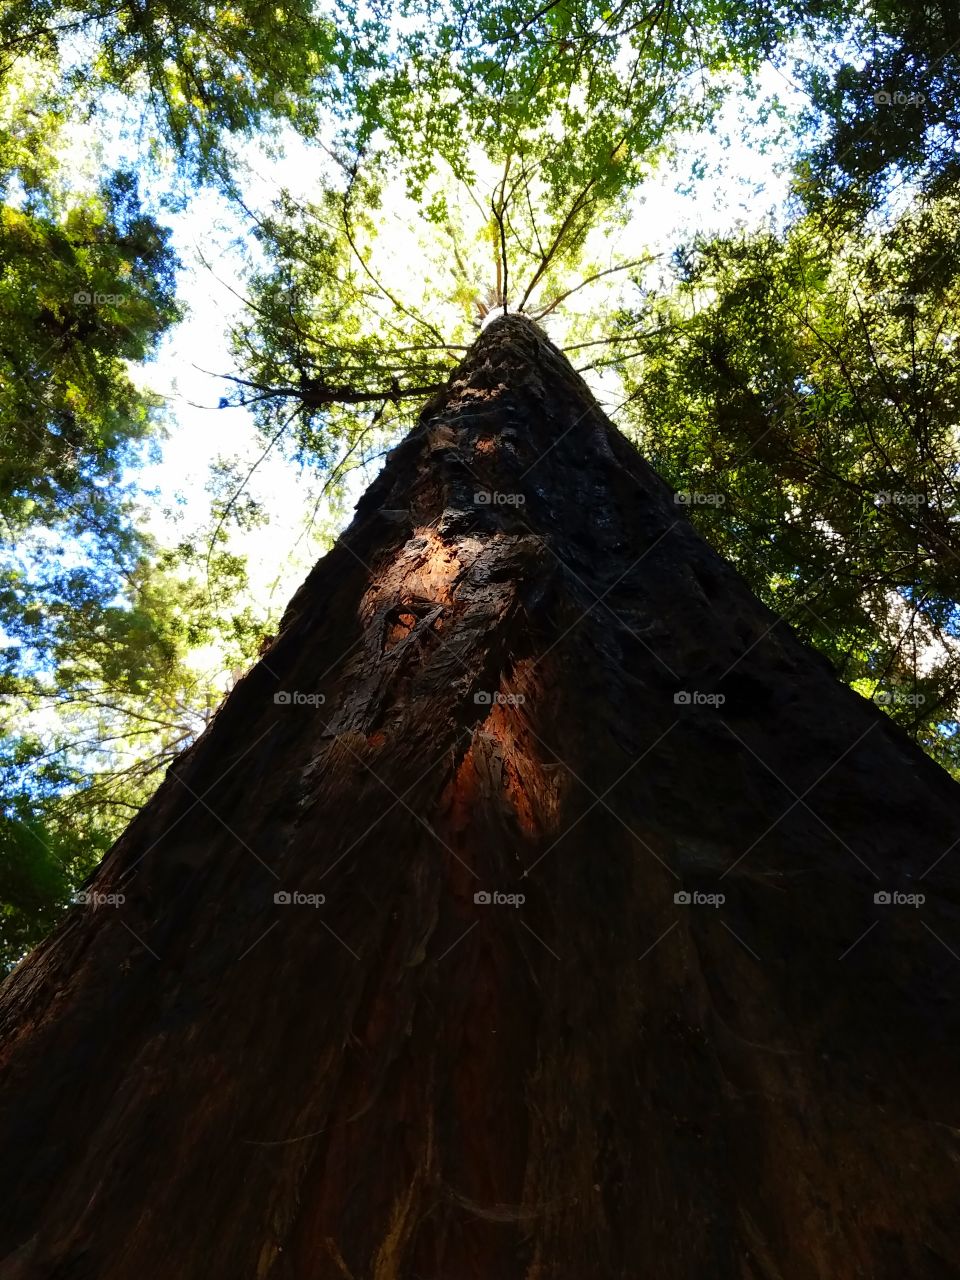 Gentle Giant - Redwood